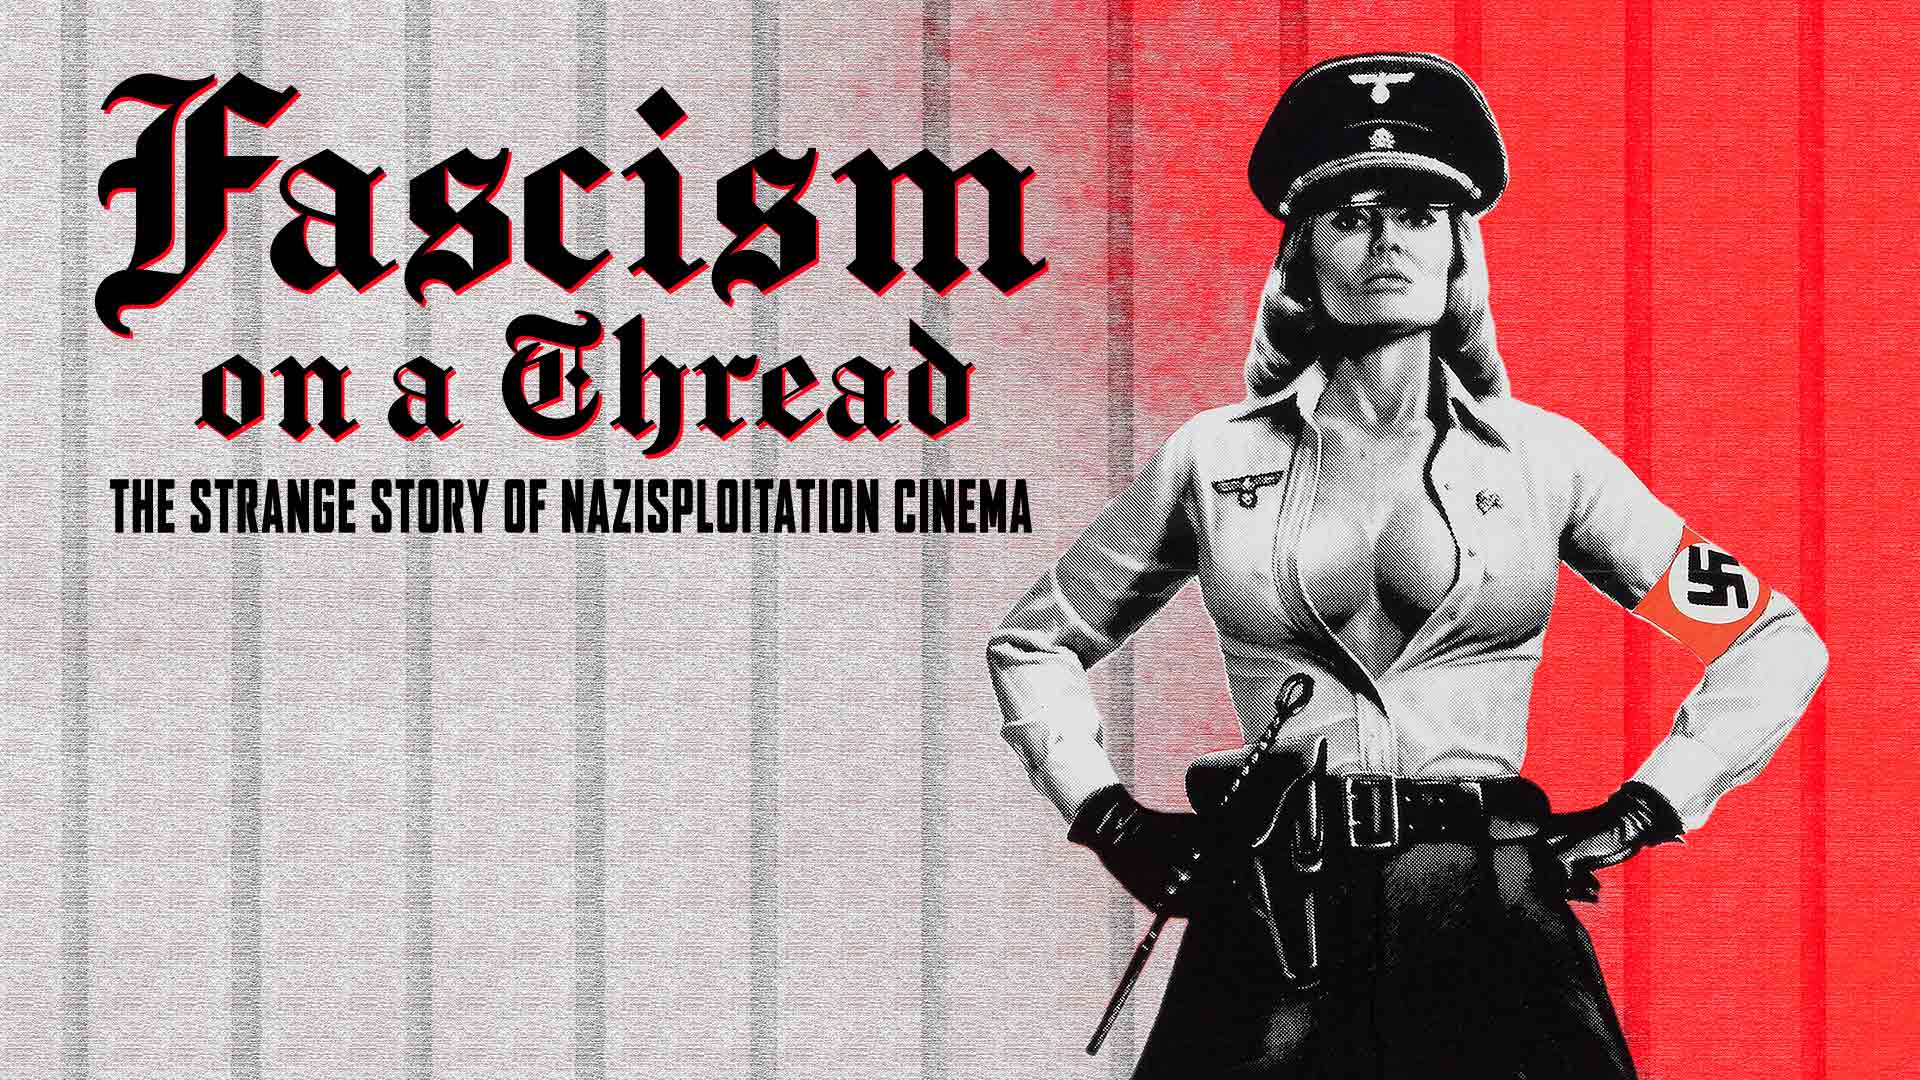 Fascism On A Thread: The Strange Story Of Nazisploitation Cinema